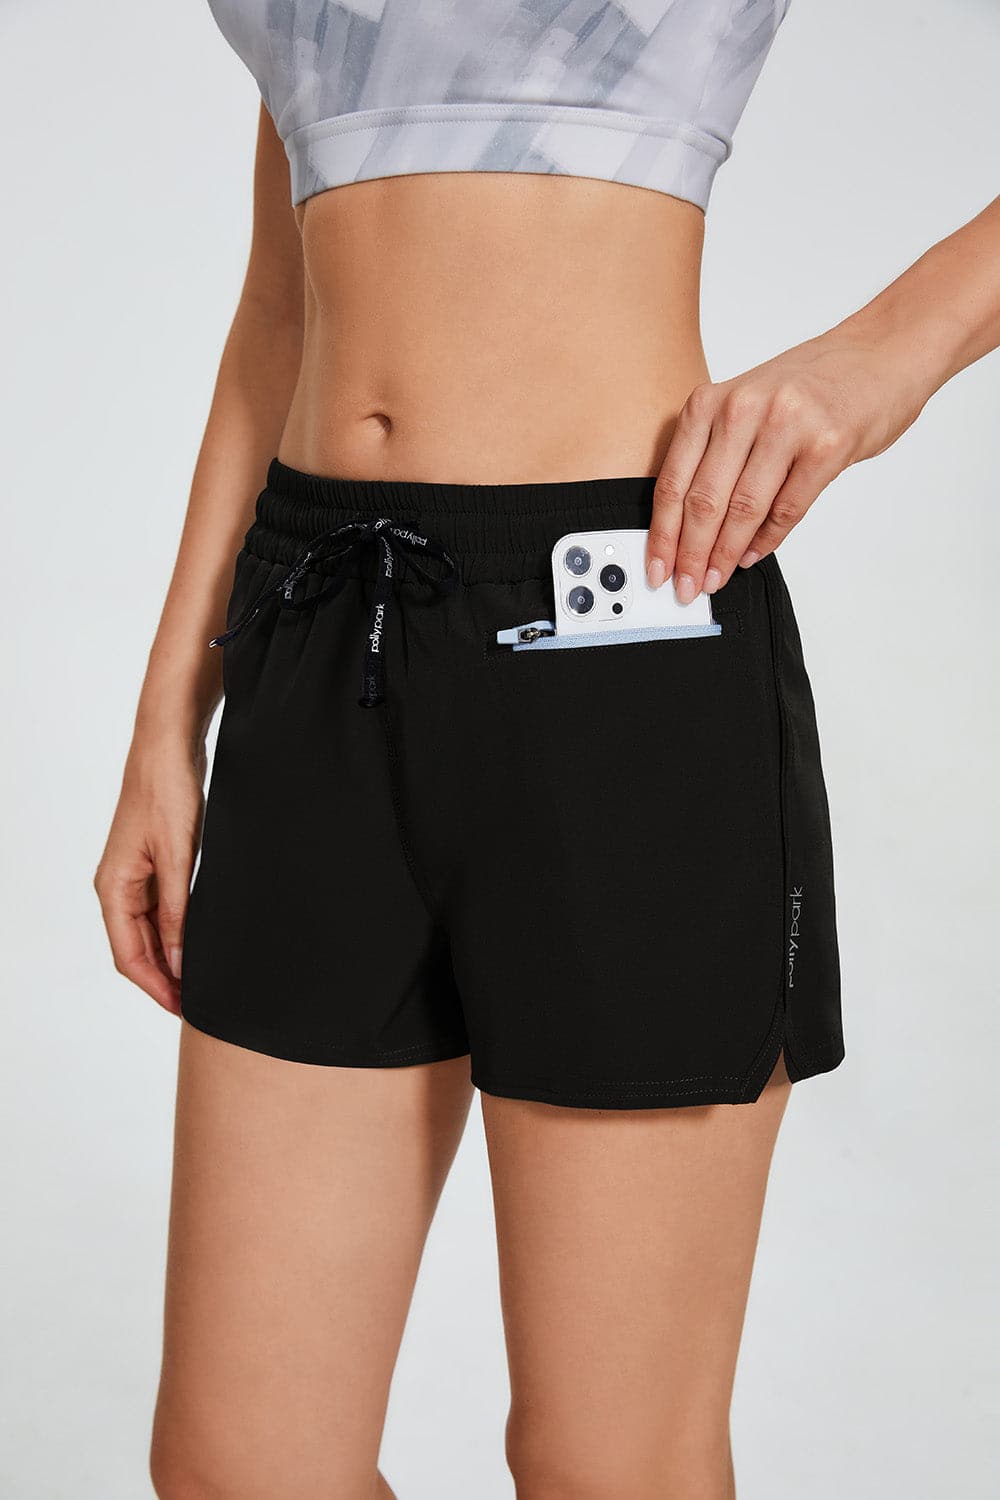 Pollypark new drawstring shorts with zip pocket